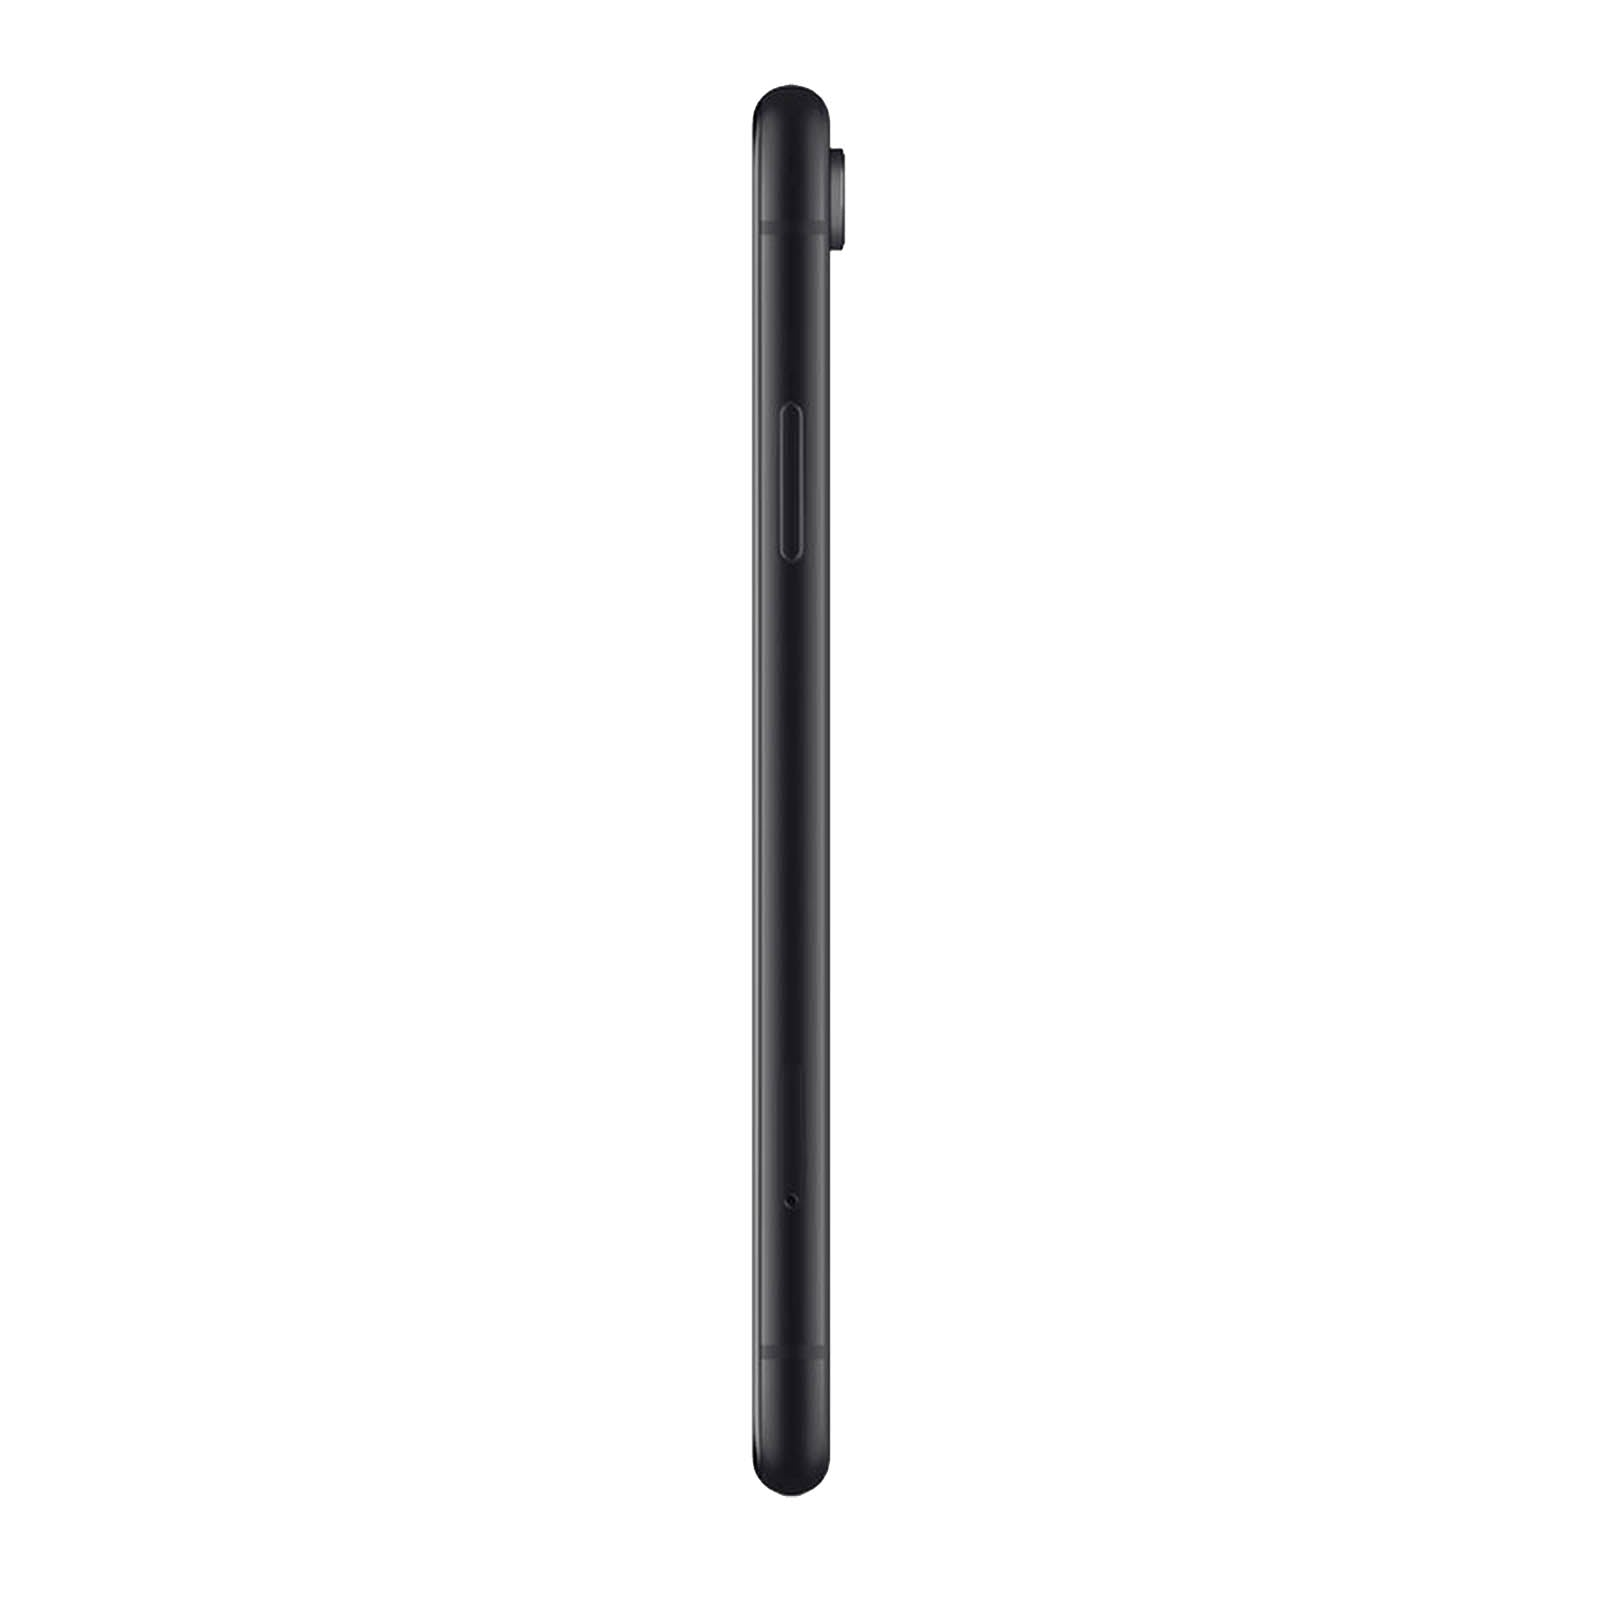 Apple iPhone XR 128GB Black Very Good - Sprint